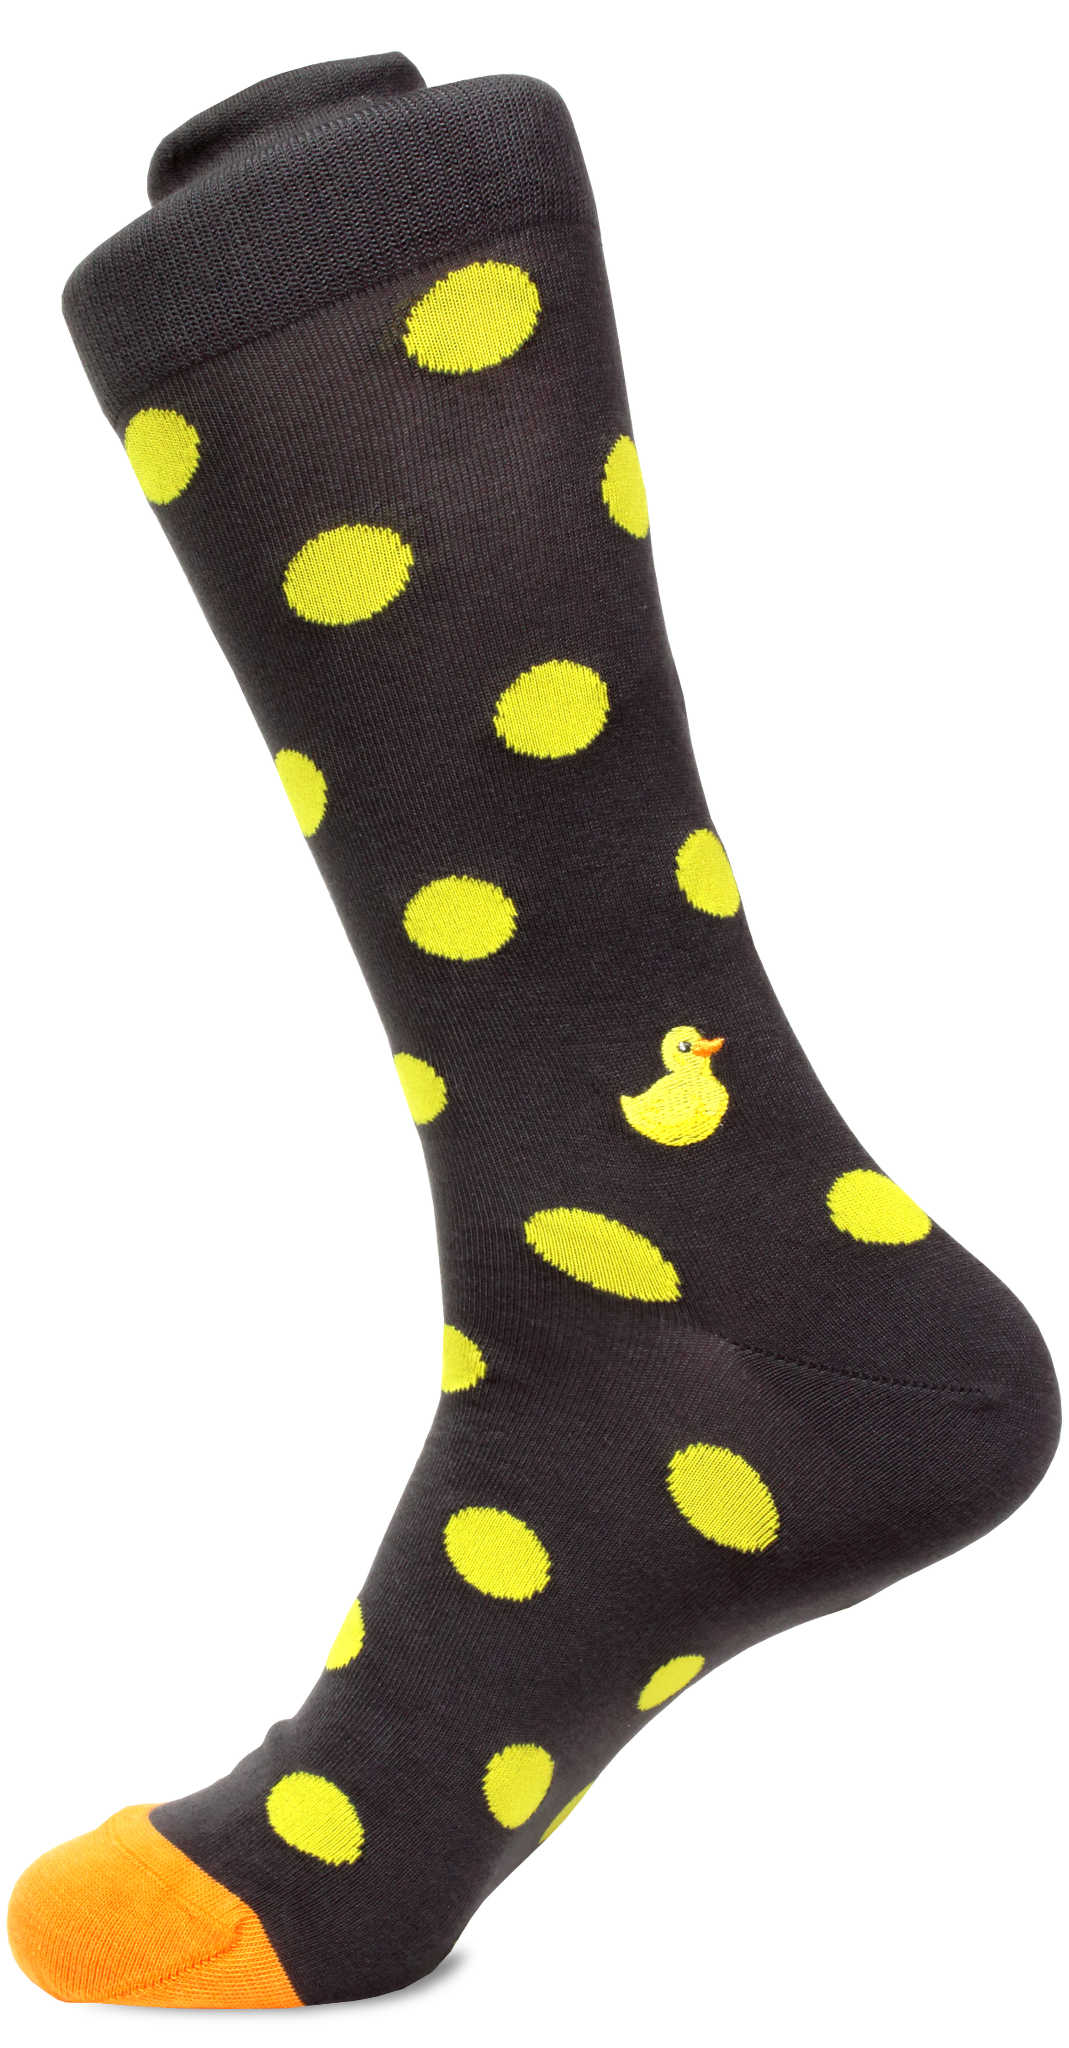 Just Ducky Polka Dot Socks